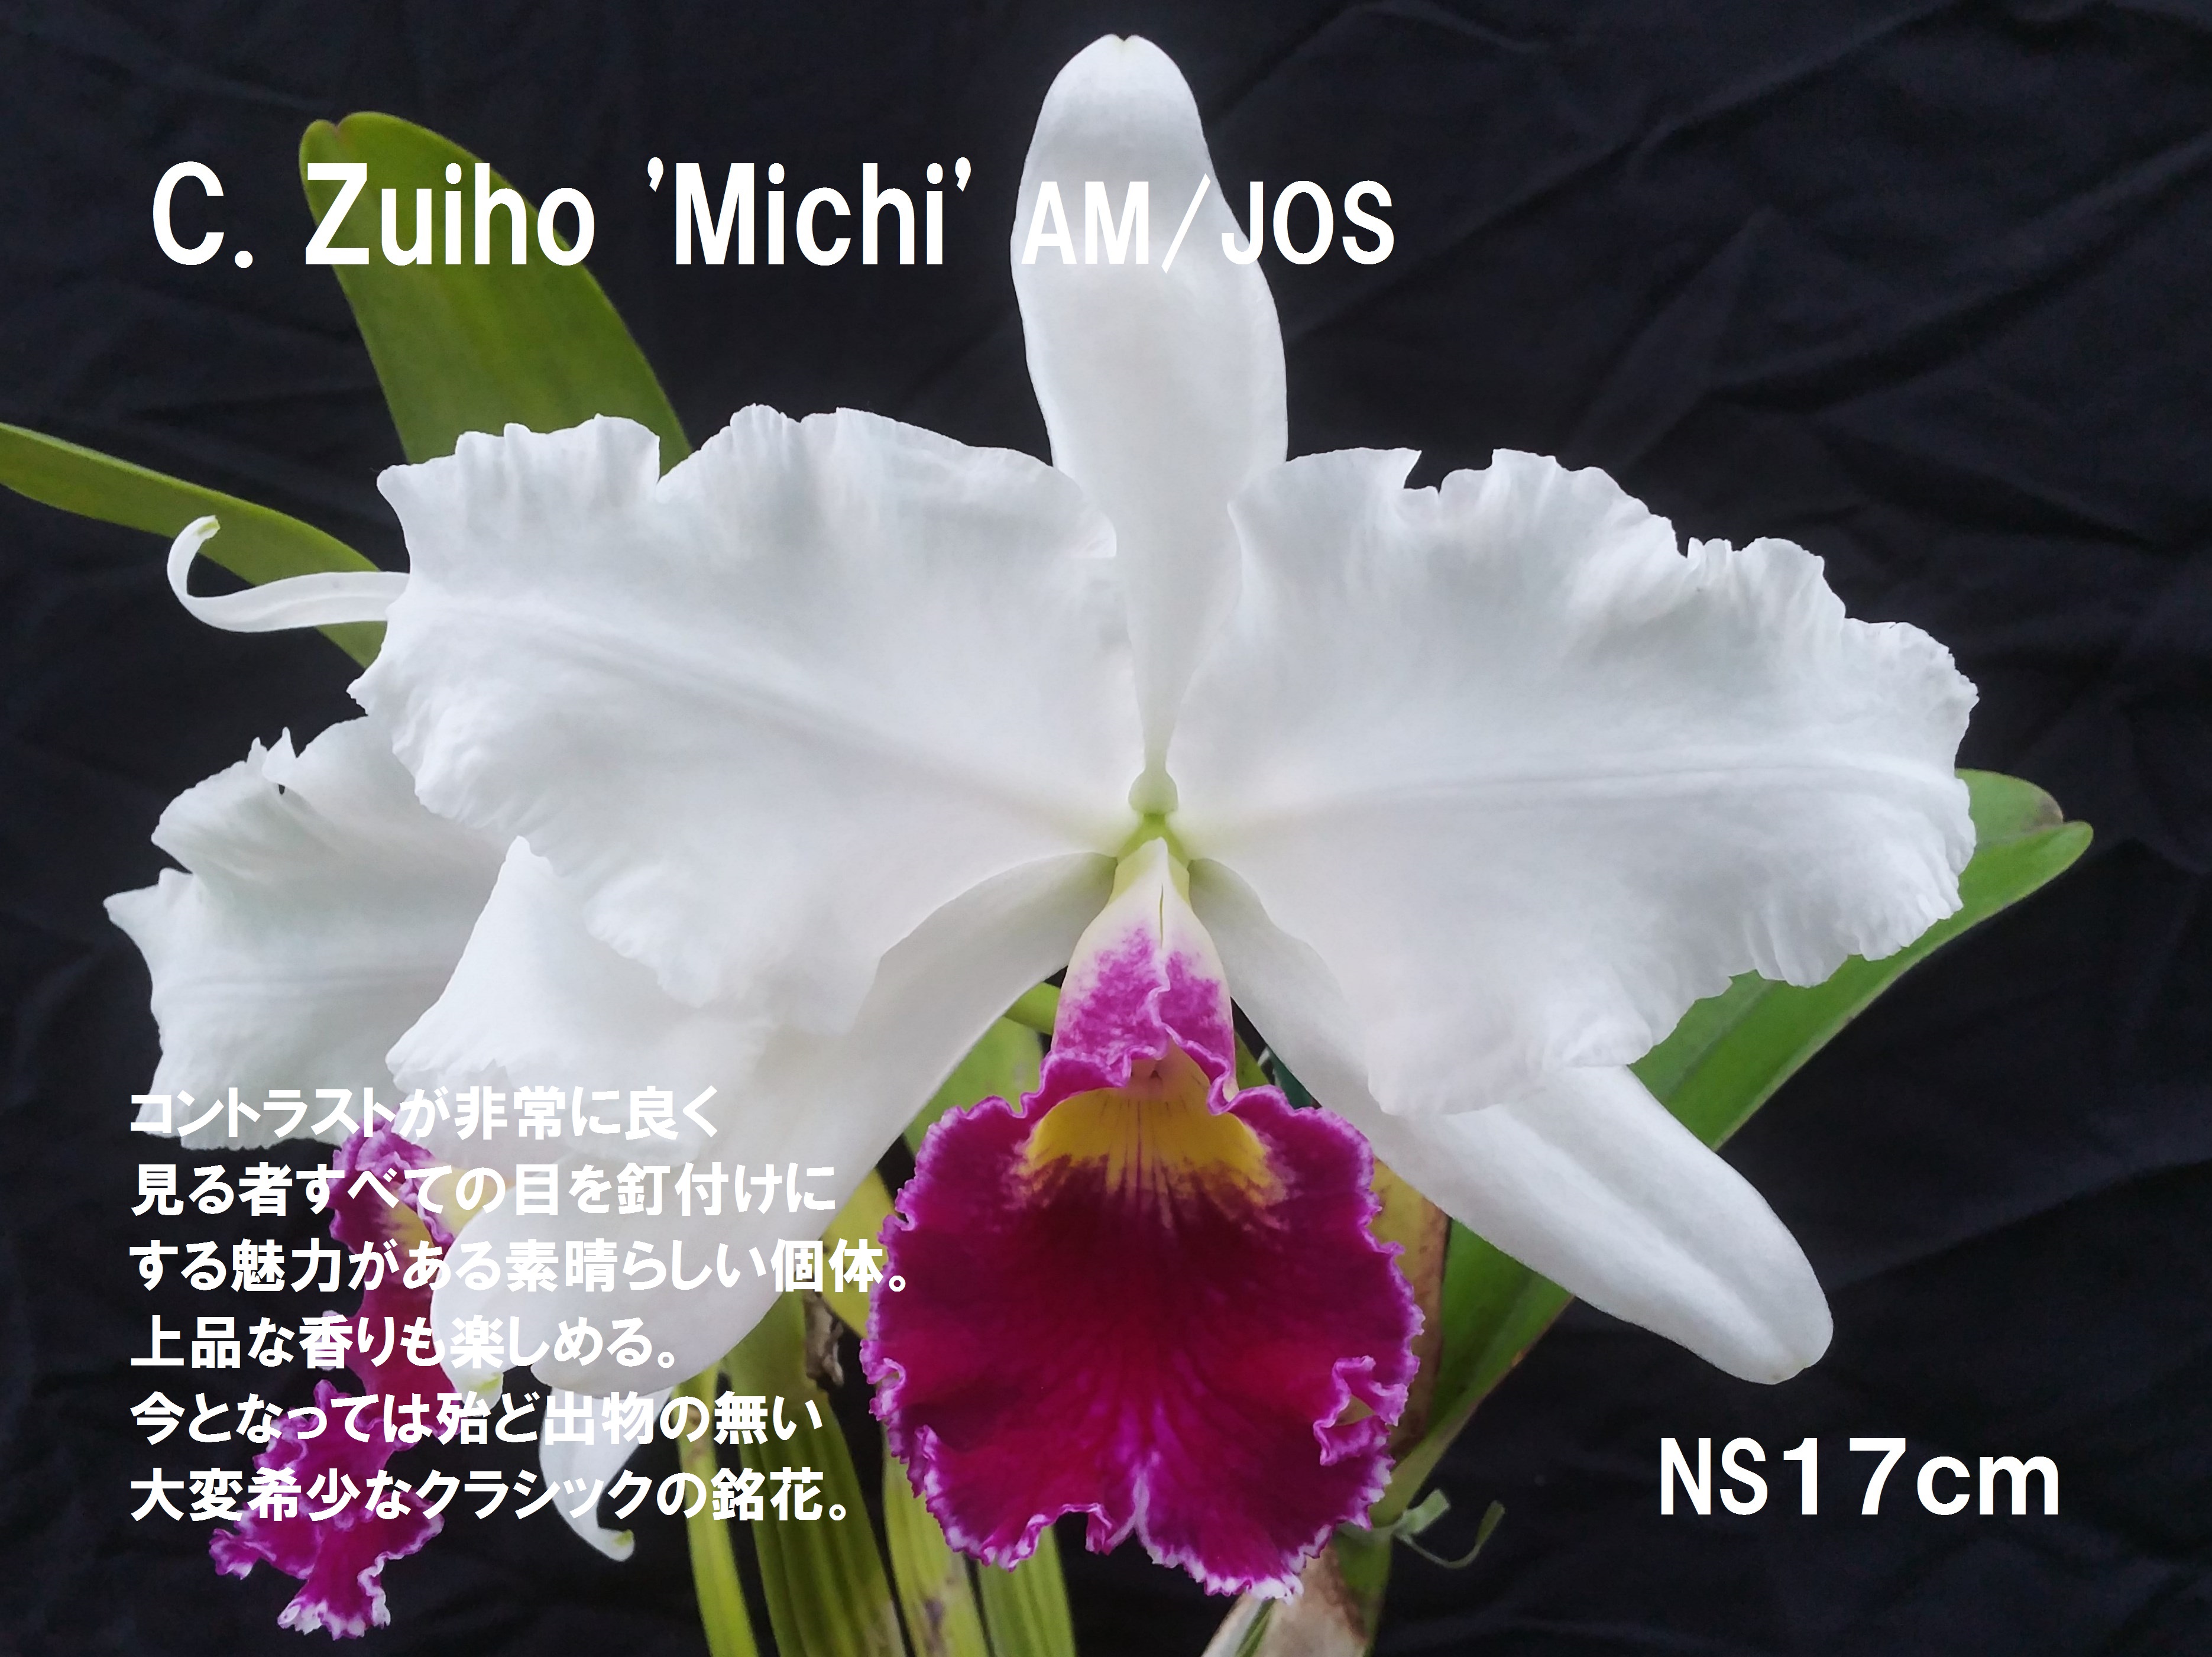 C Zuiho Michi Am Jos 細川洋蘭農園 新潟の胡蝶蘭と草花が並ぶ農園 公式ホームページ